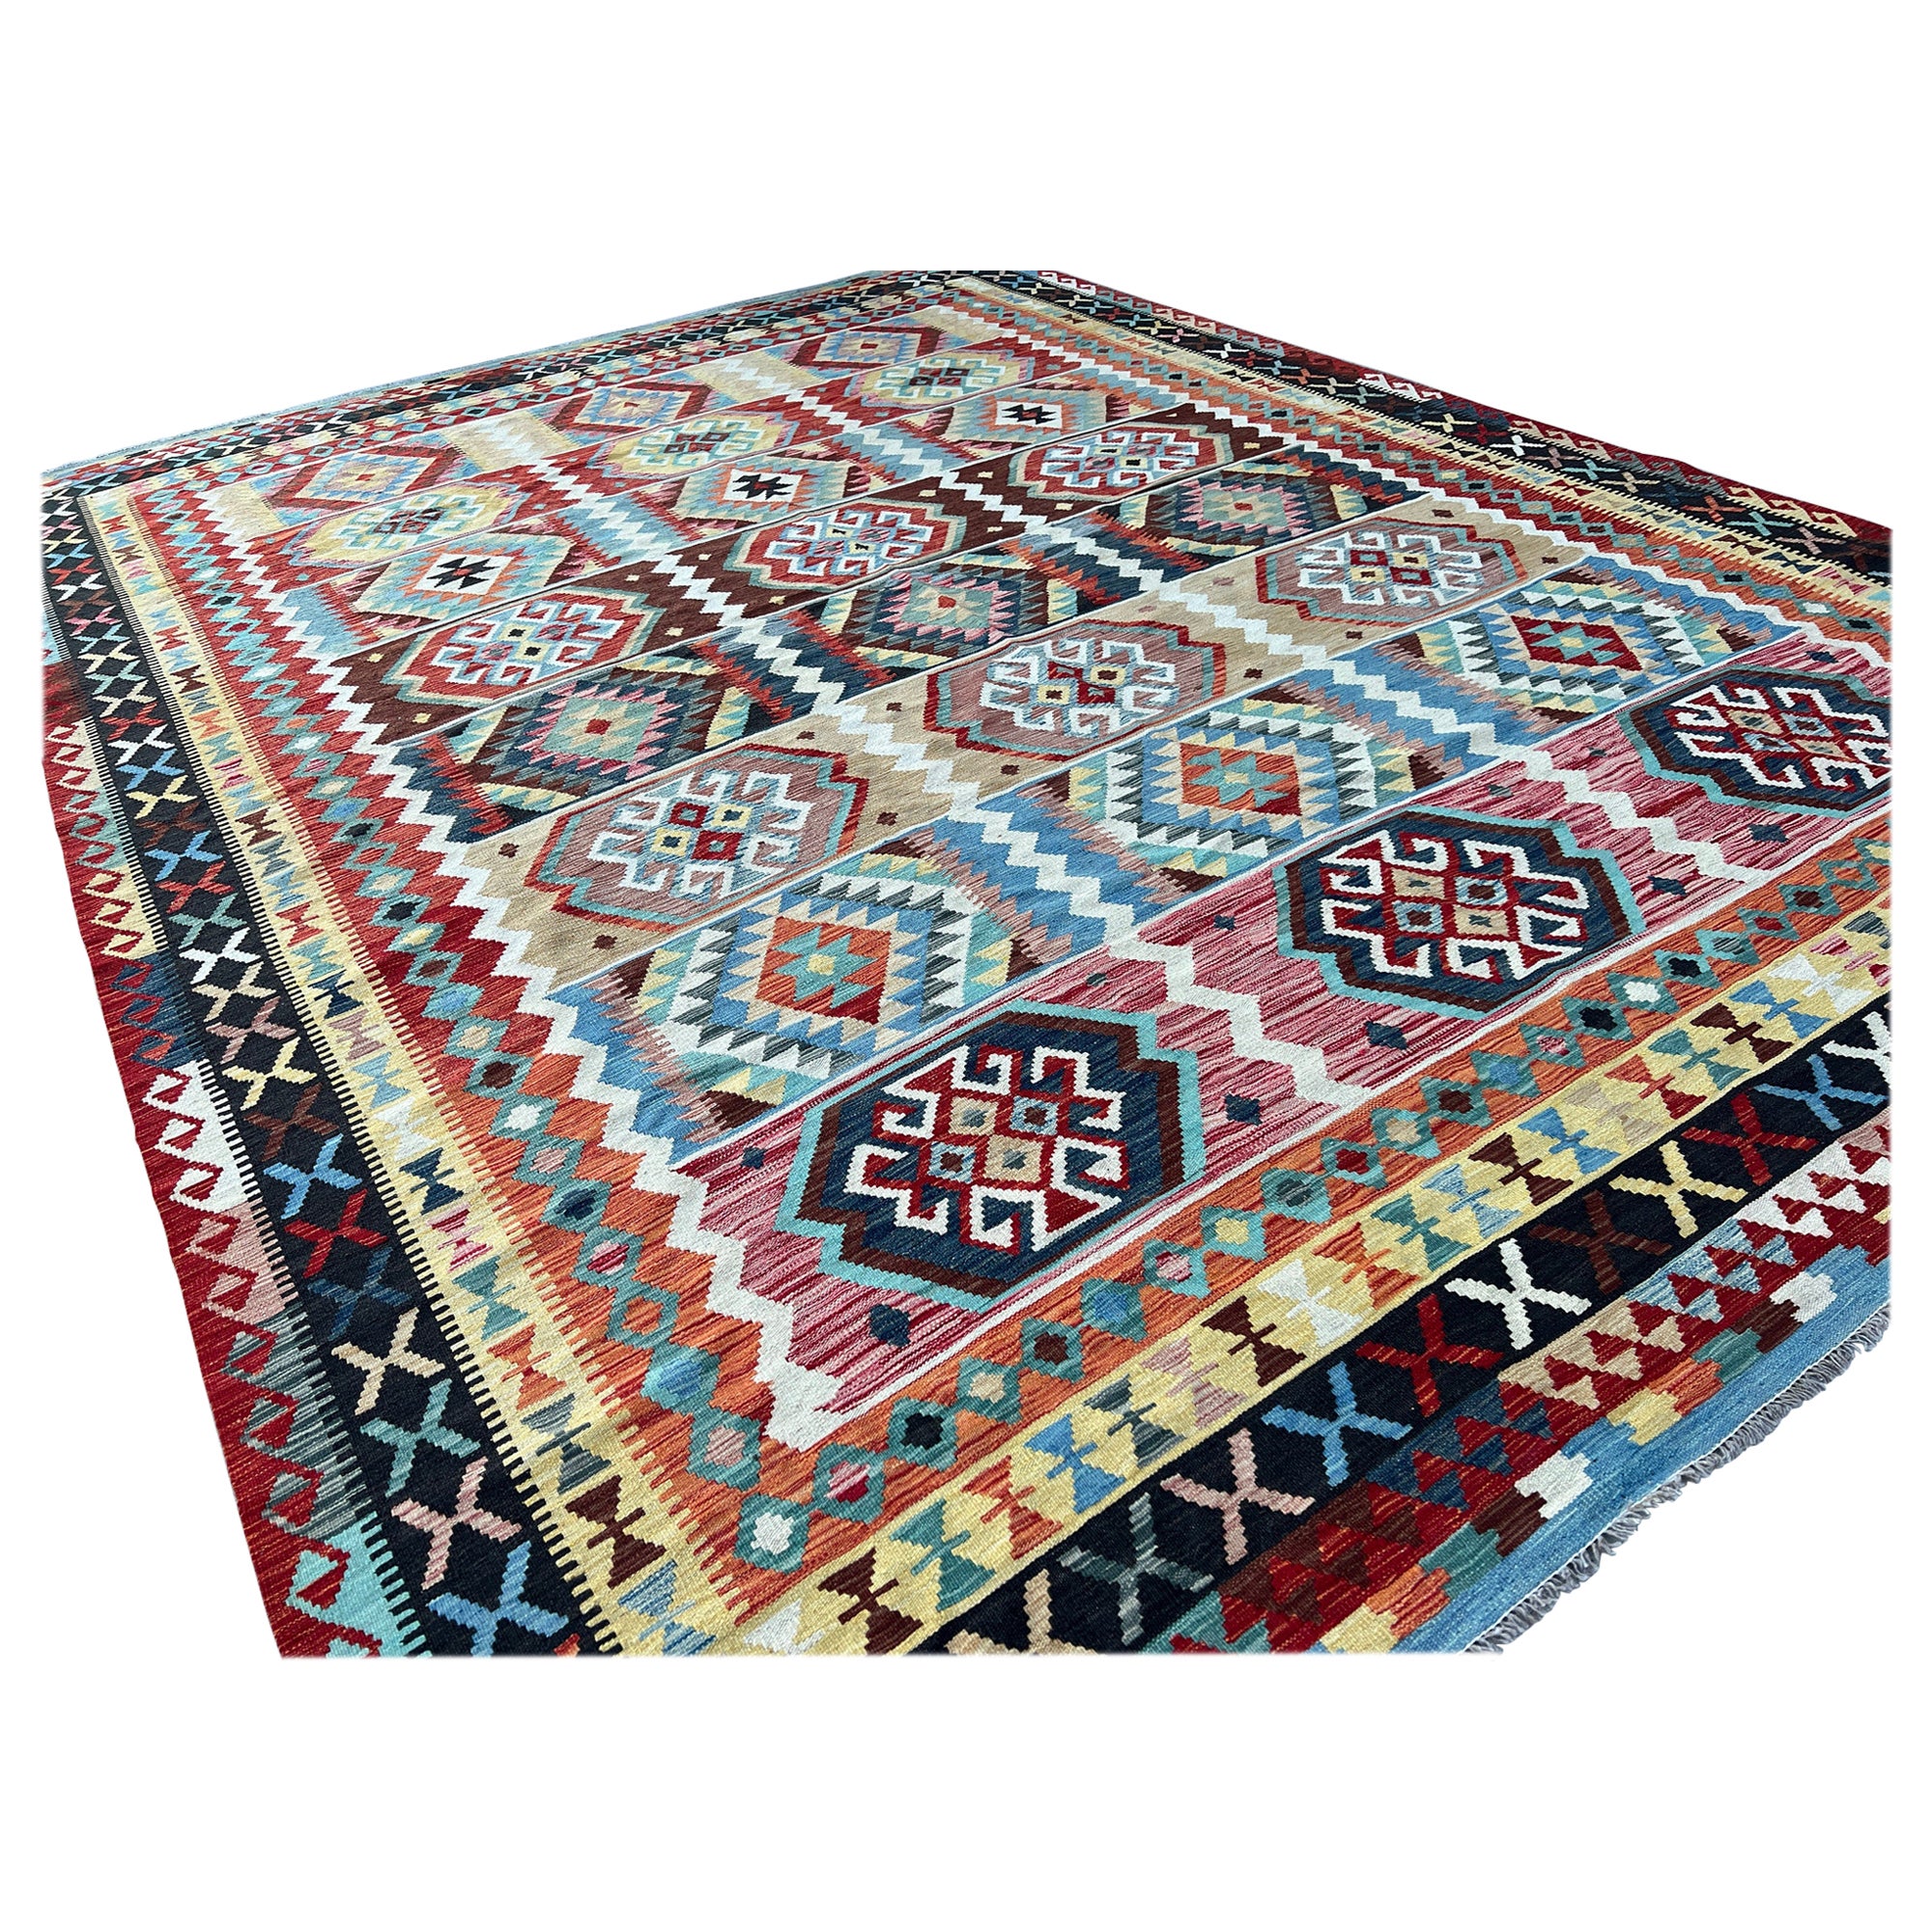 10x13 Hand-Knotted Afghan Kilim Rug Premium Hand-Spun Afghan Wool Fair Trade